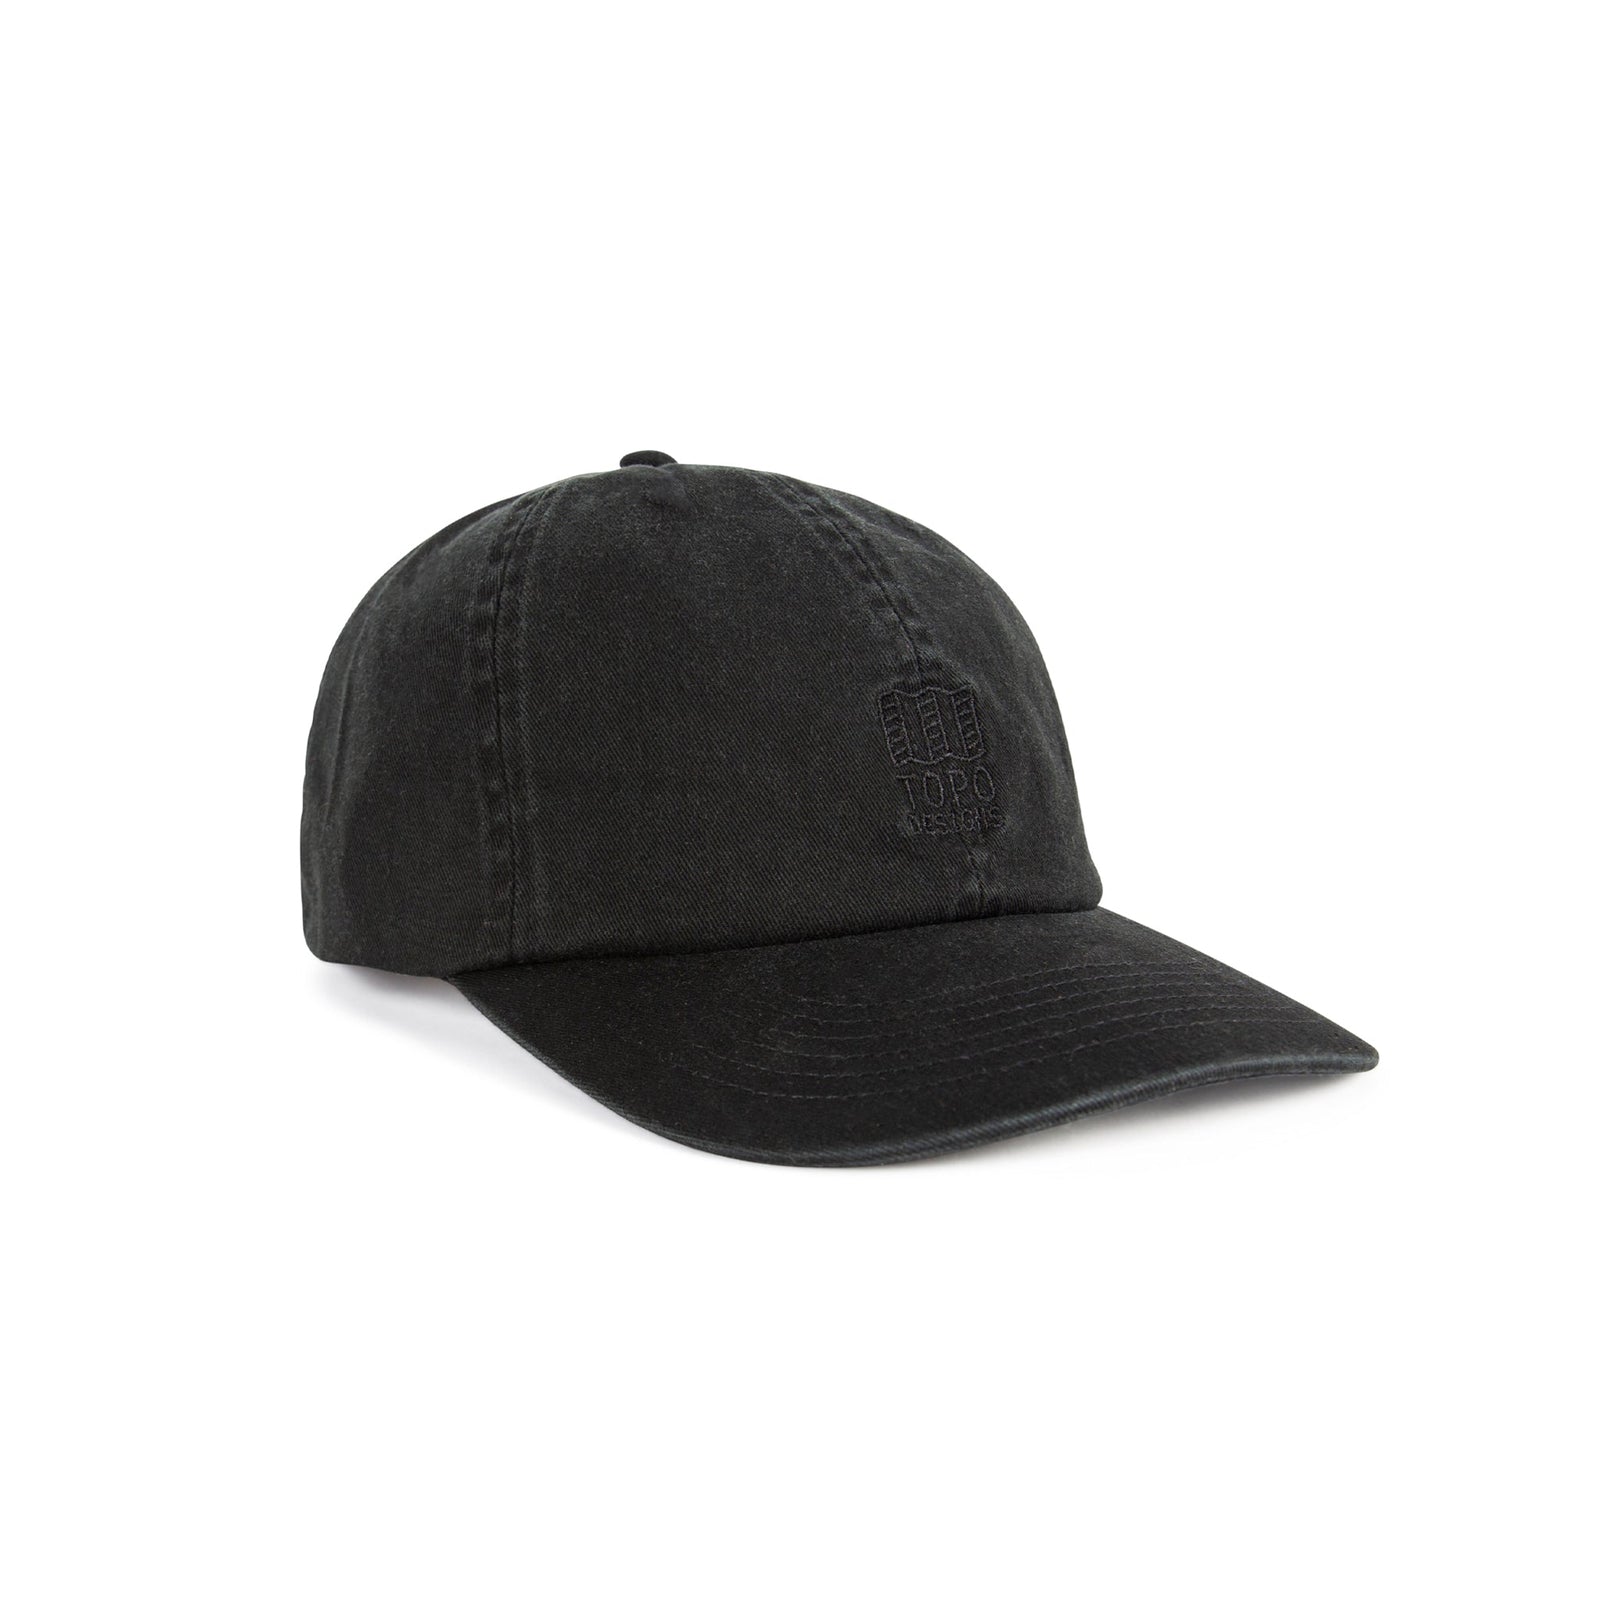 Topo Designs Mountain Ball Cap cotton logo hat in "Black".